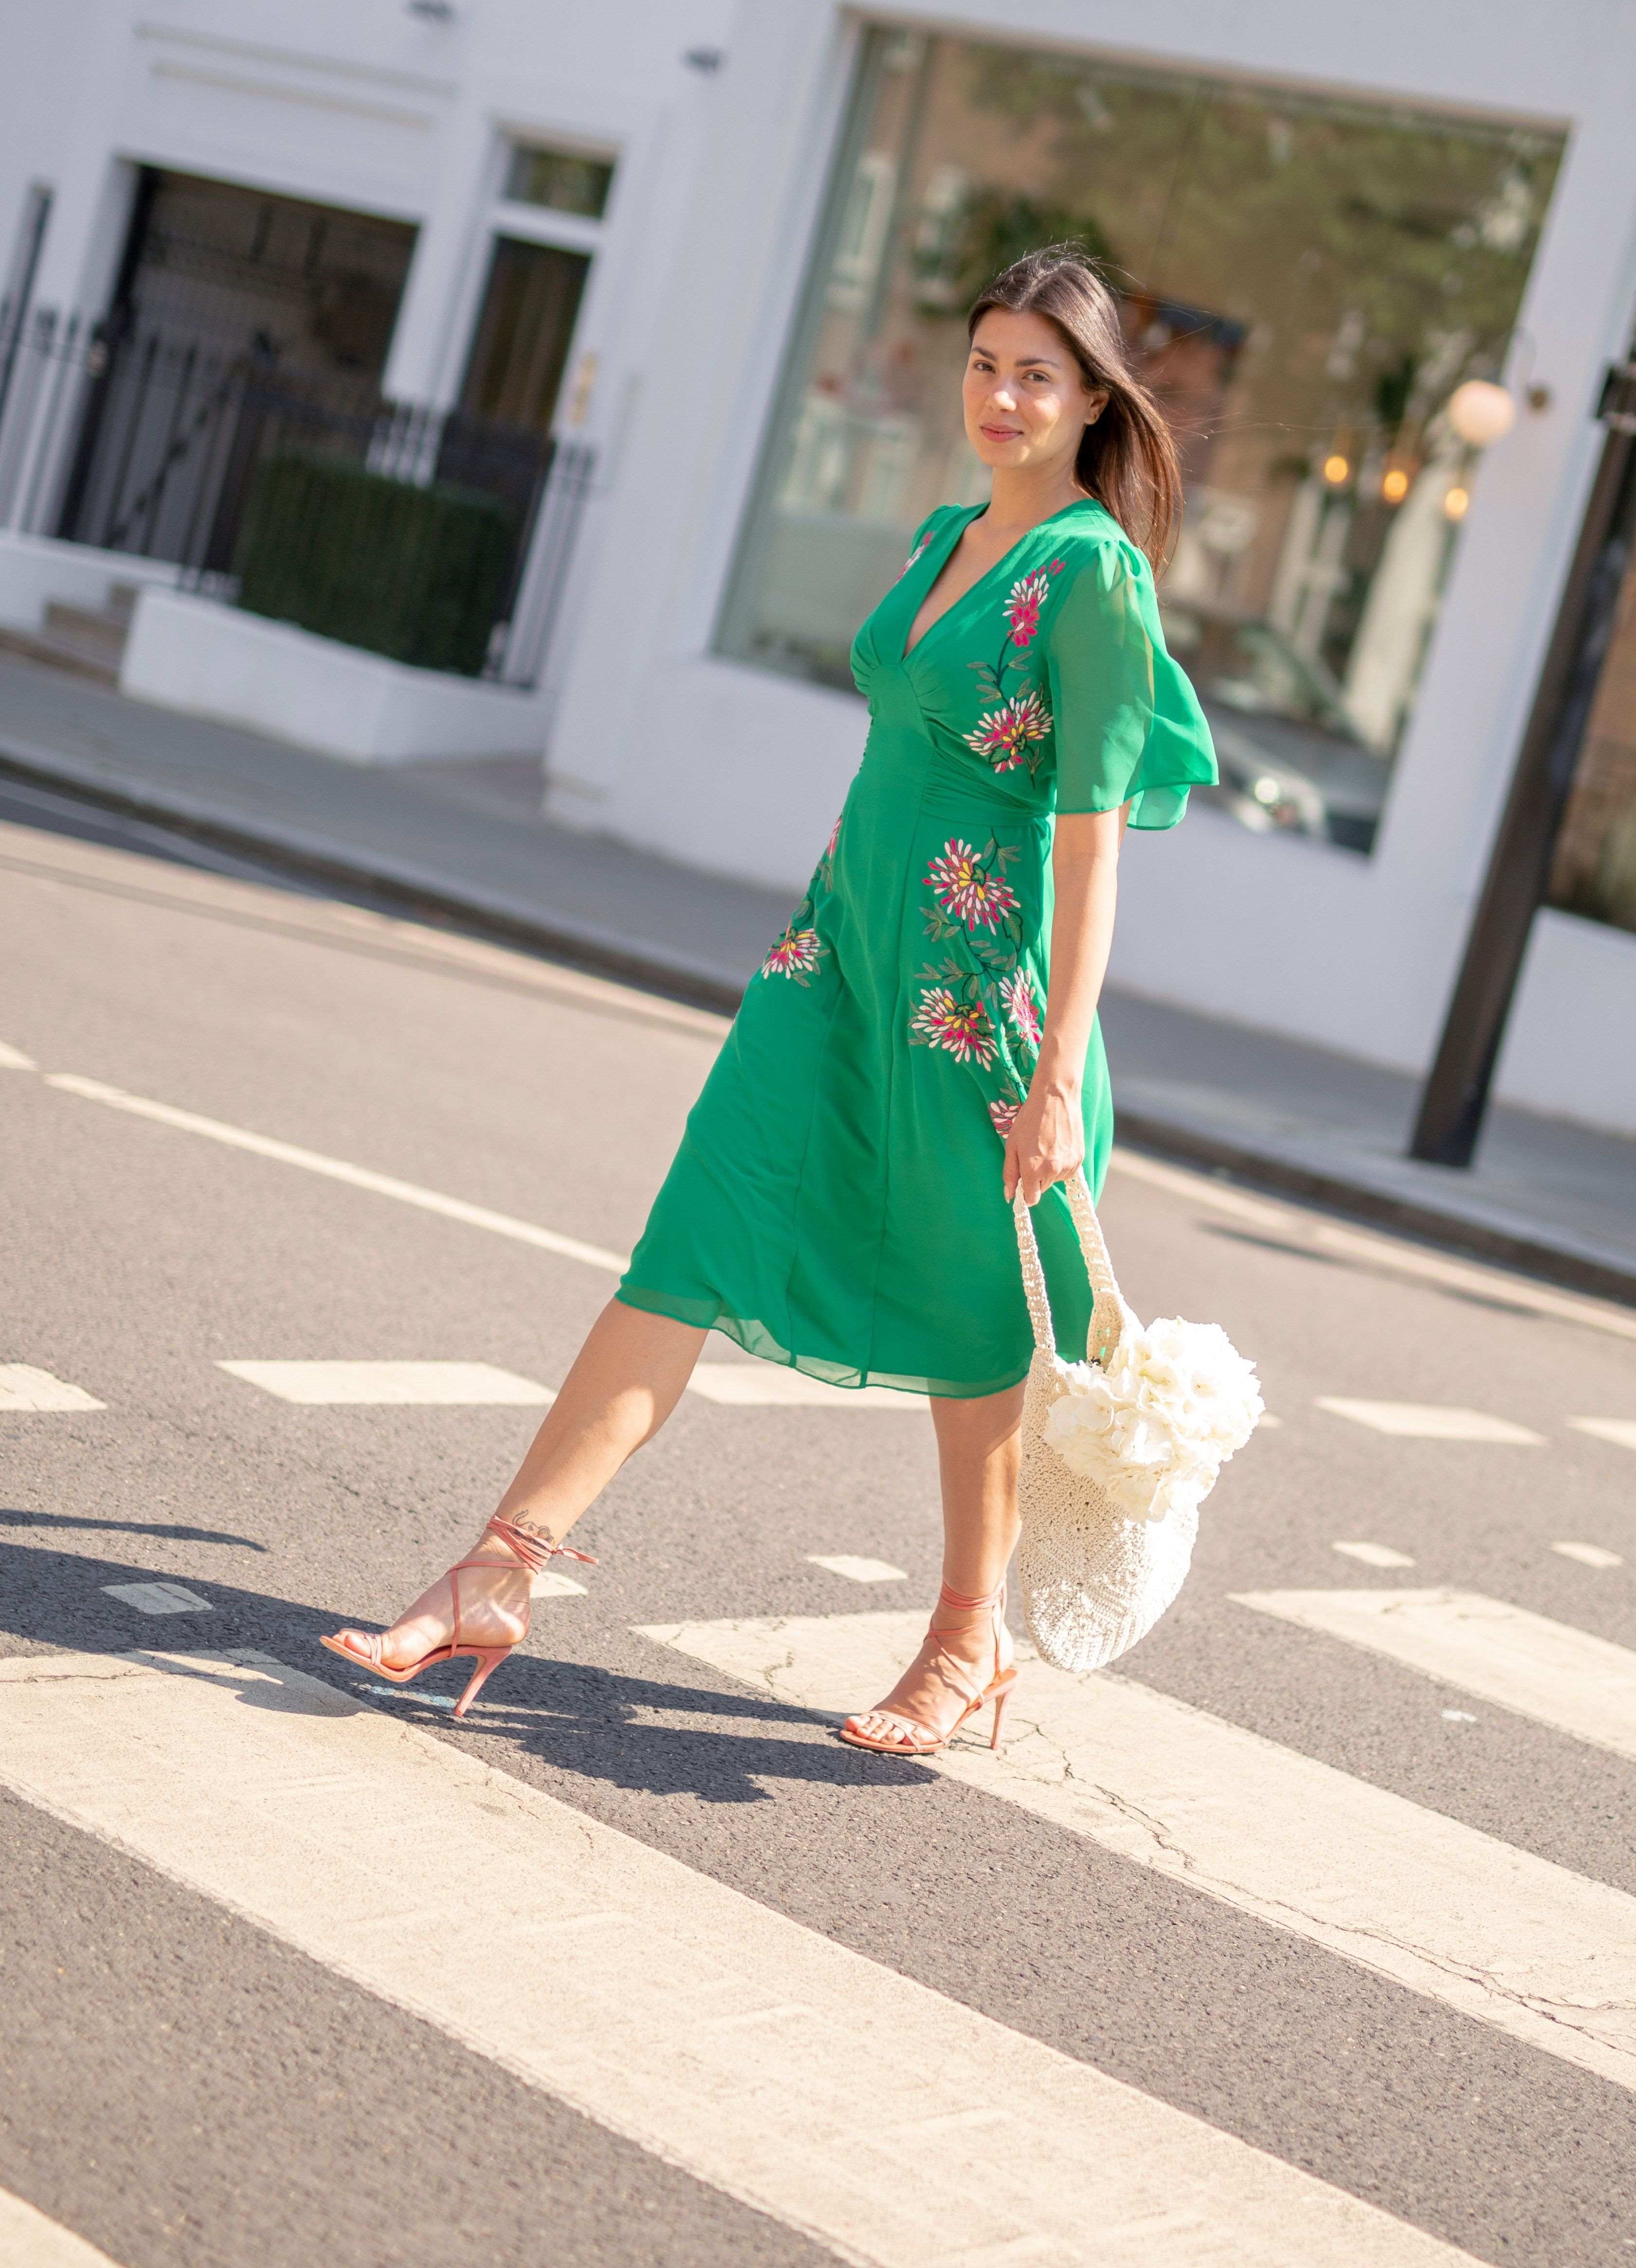 woman wearing green summer dress walking